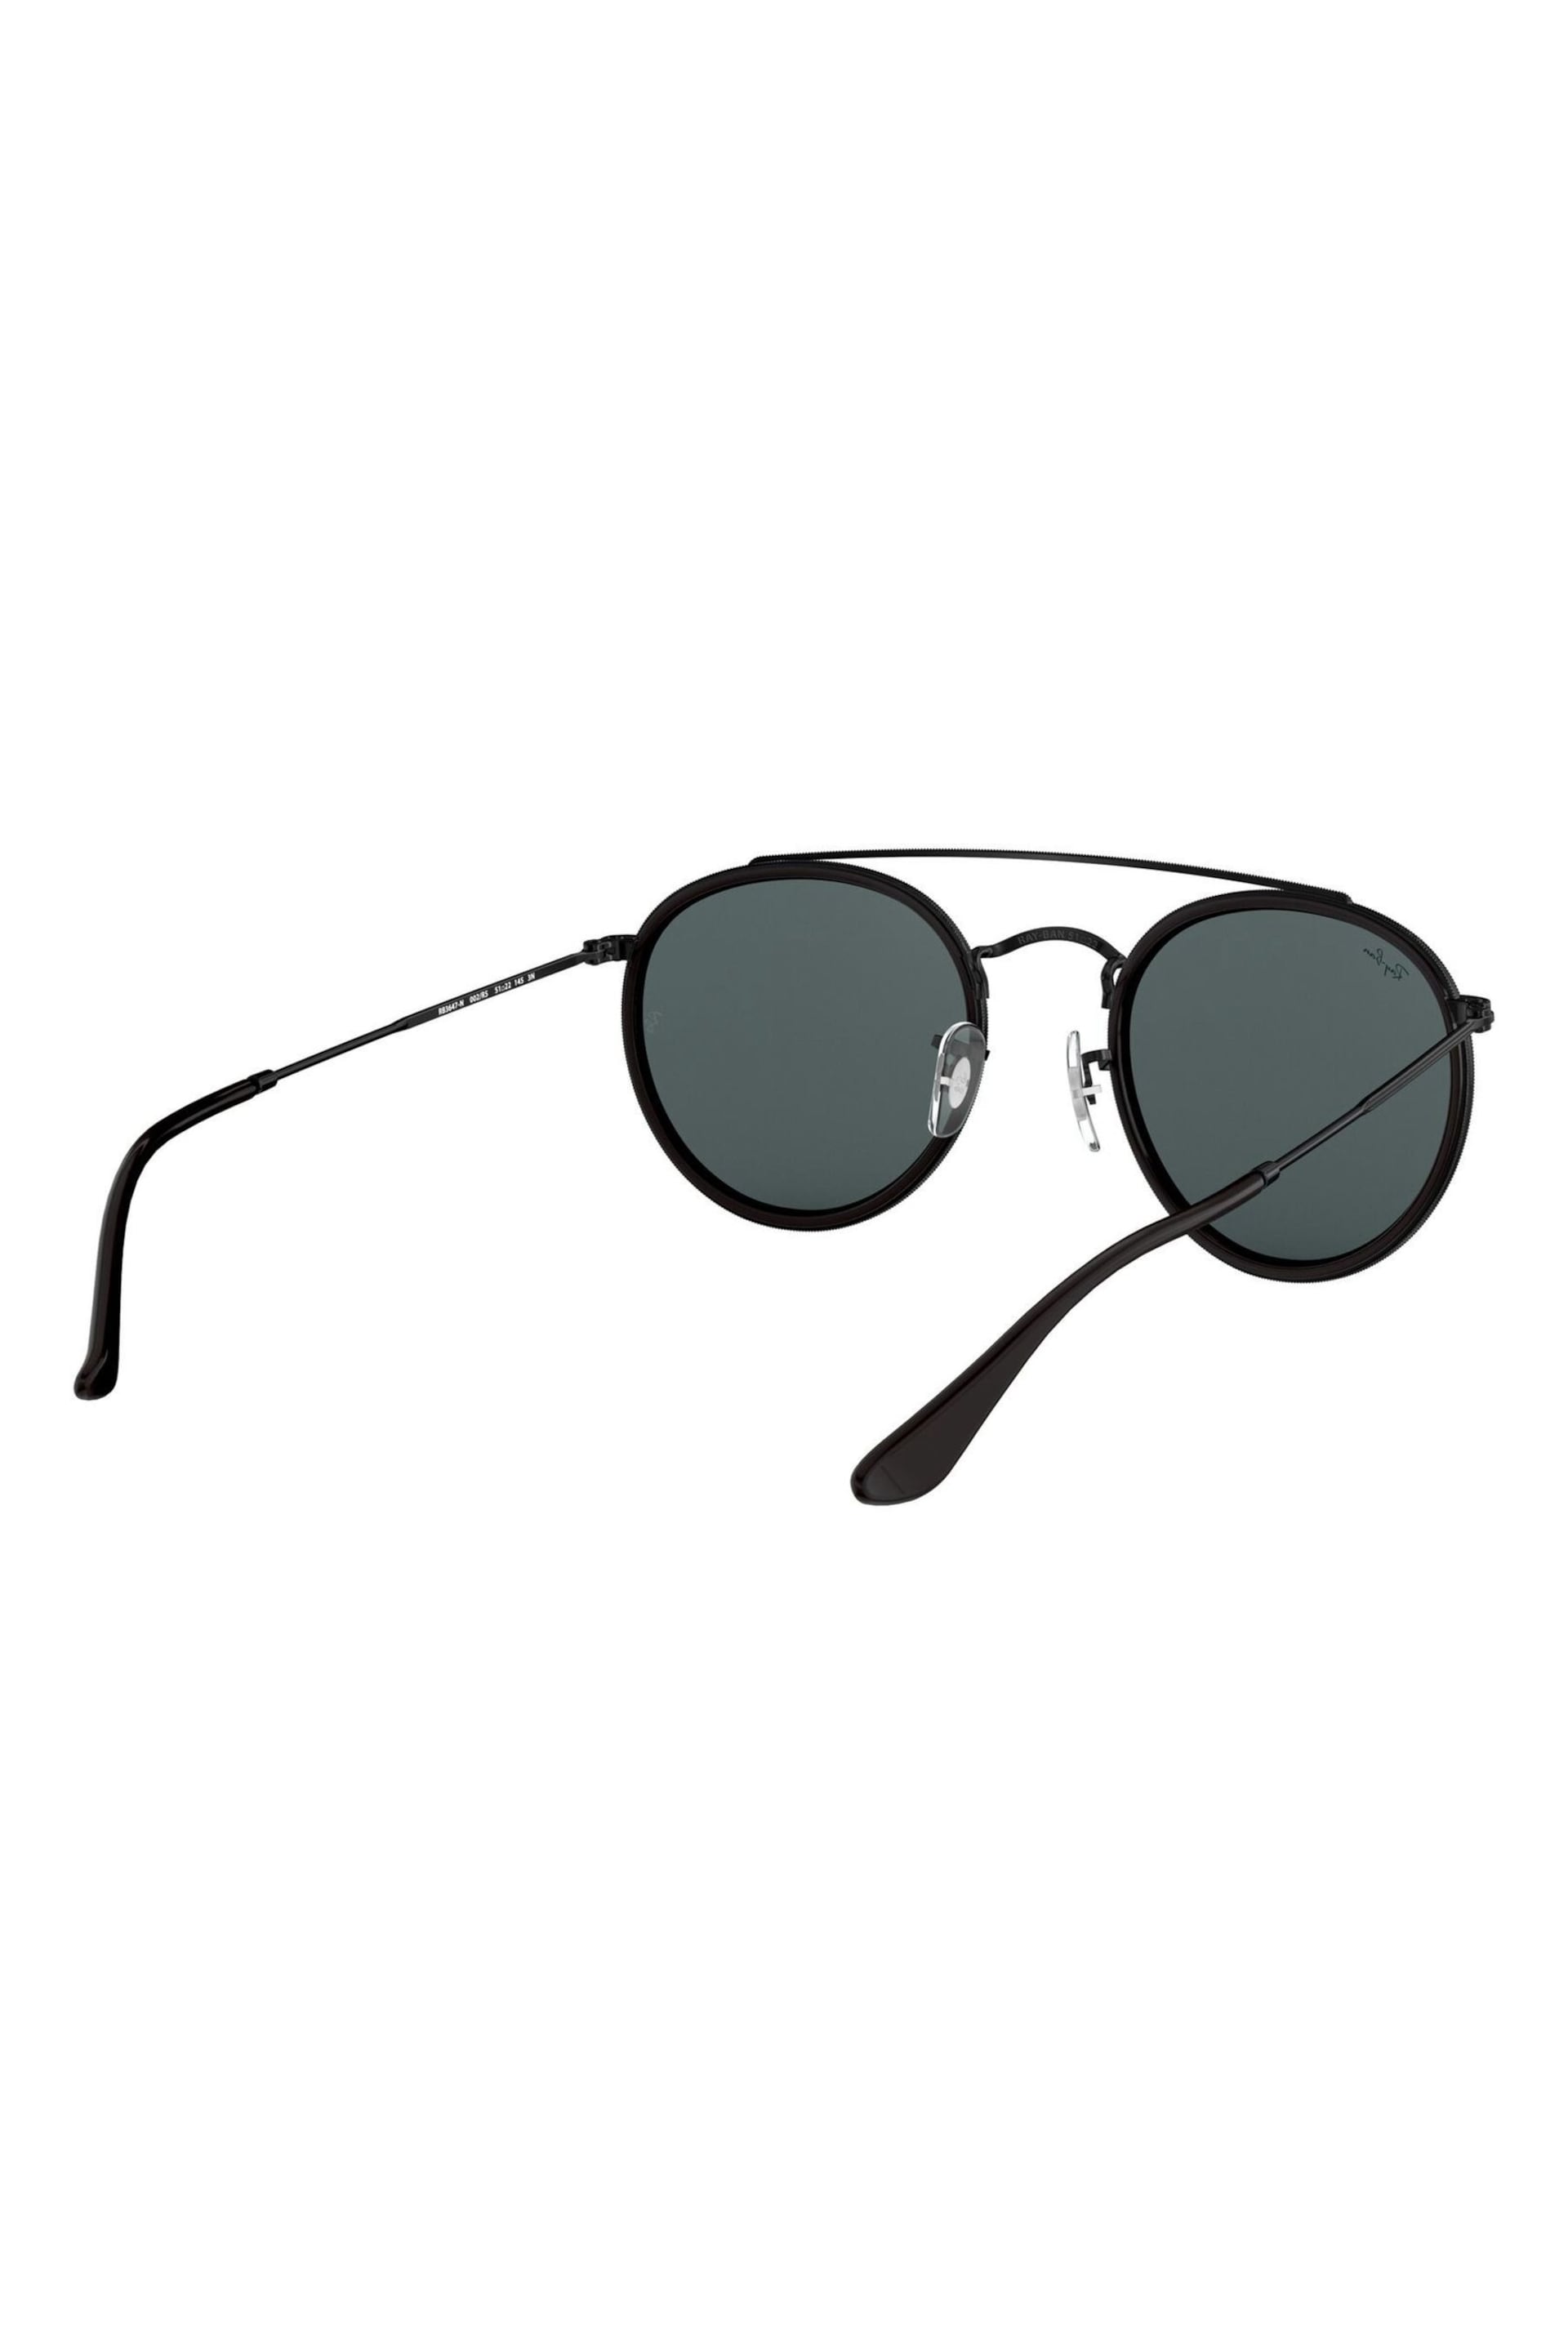 Ray-Ban Round Sunglasses - Image 12 of 14